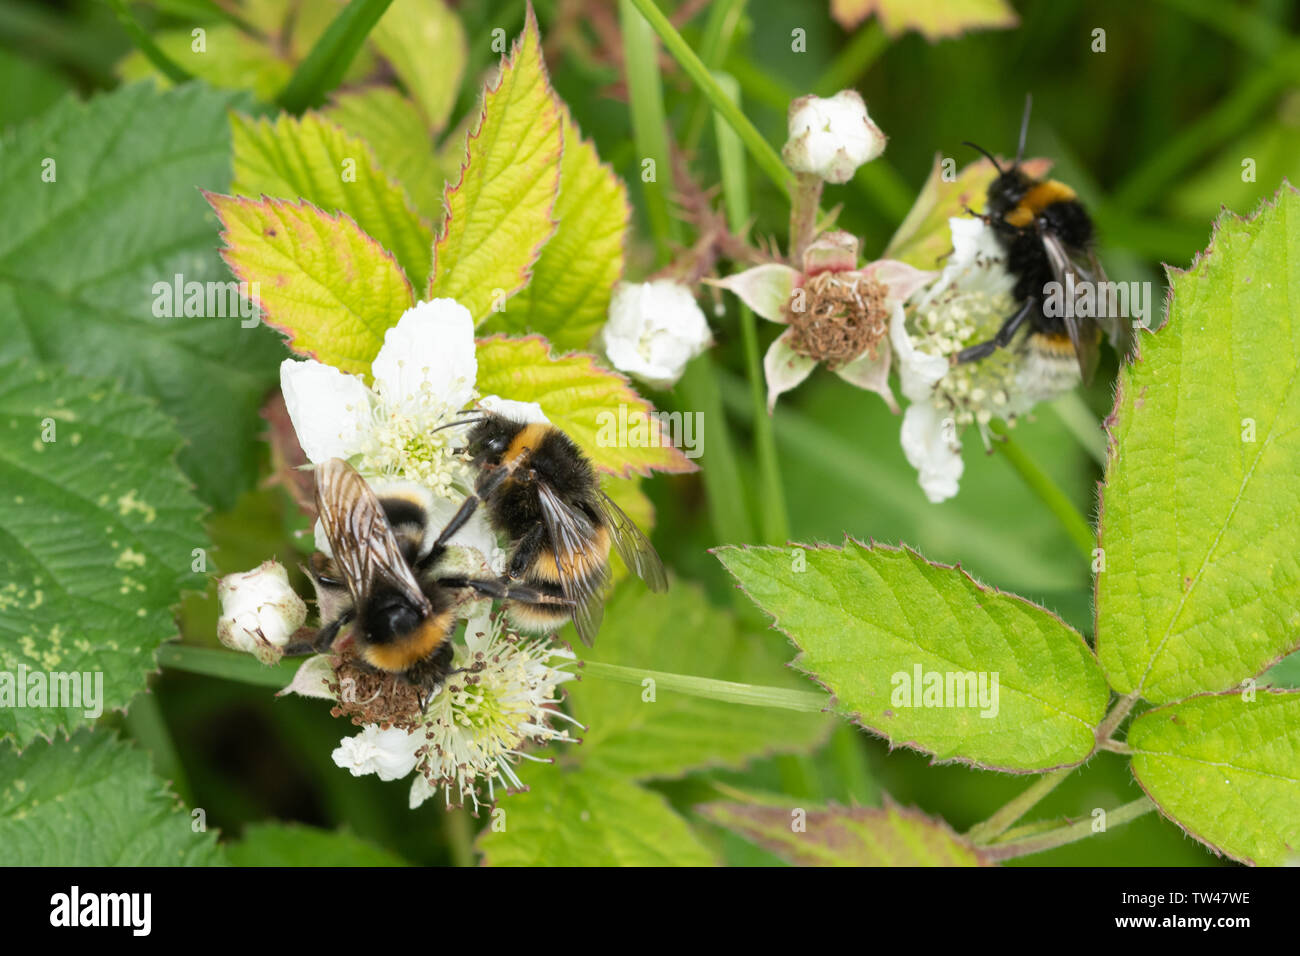 Three bumblebees on bramble (blackberry) flowers during June, UK Stock Photo